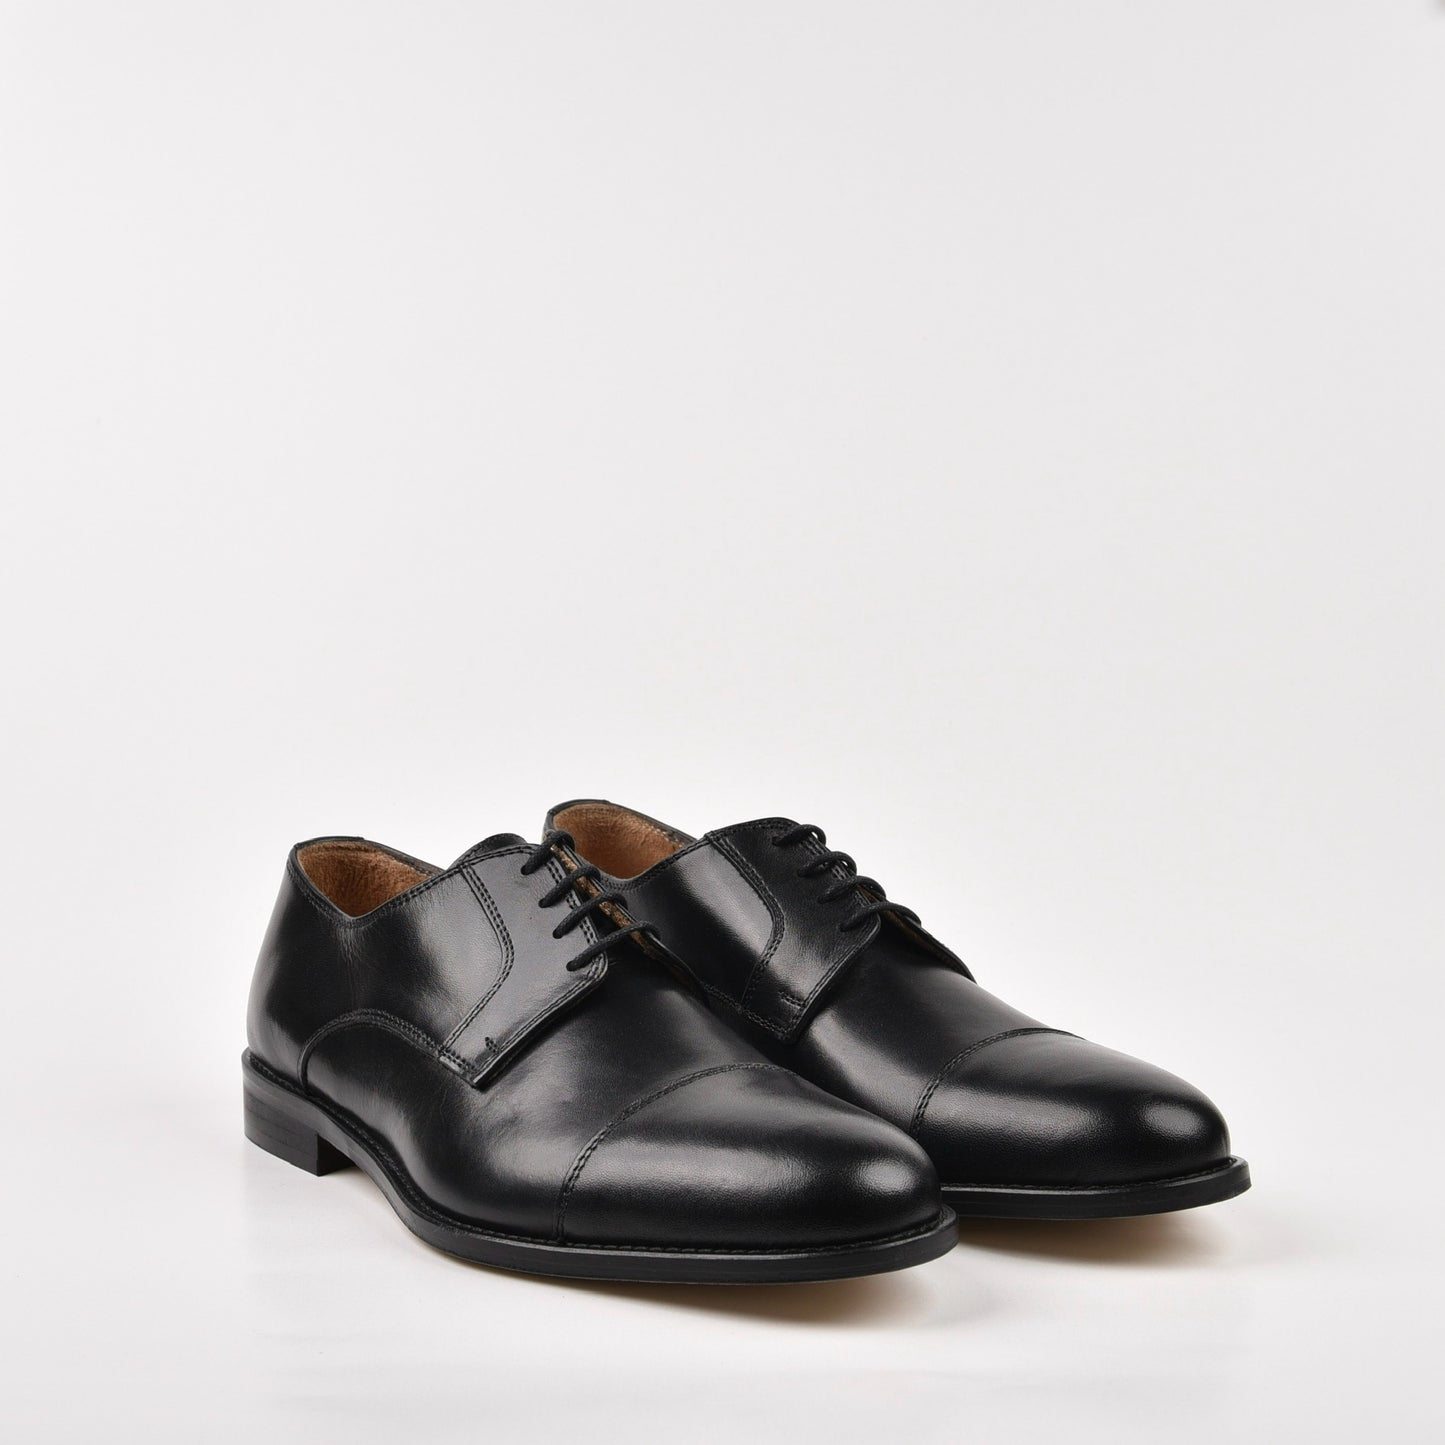 Shalapi Italian classic shoes for men in black